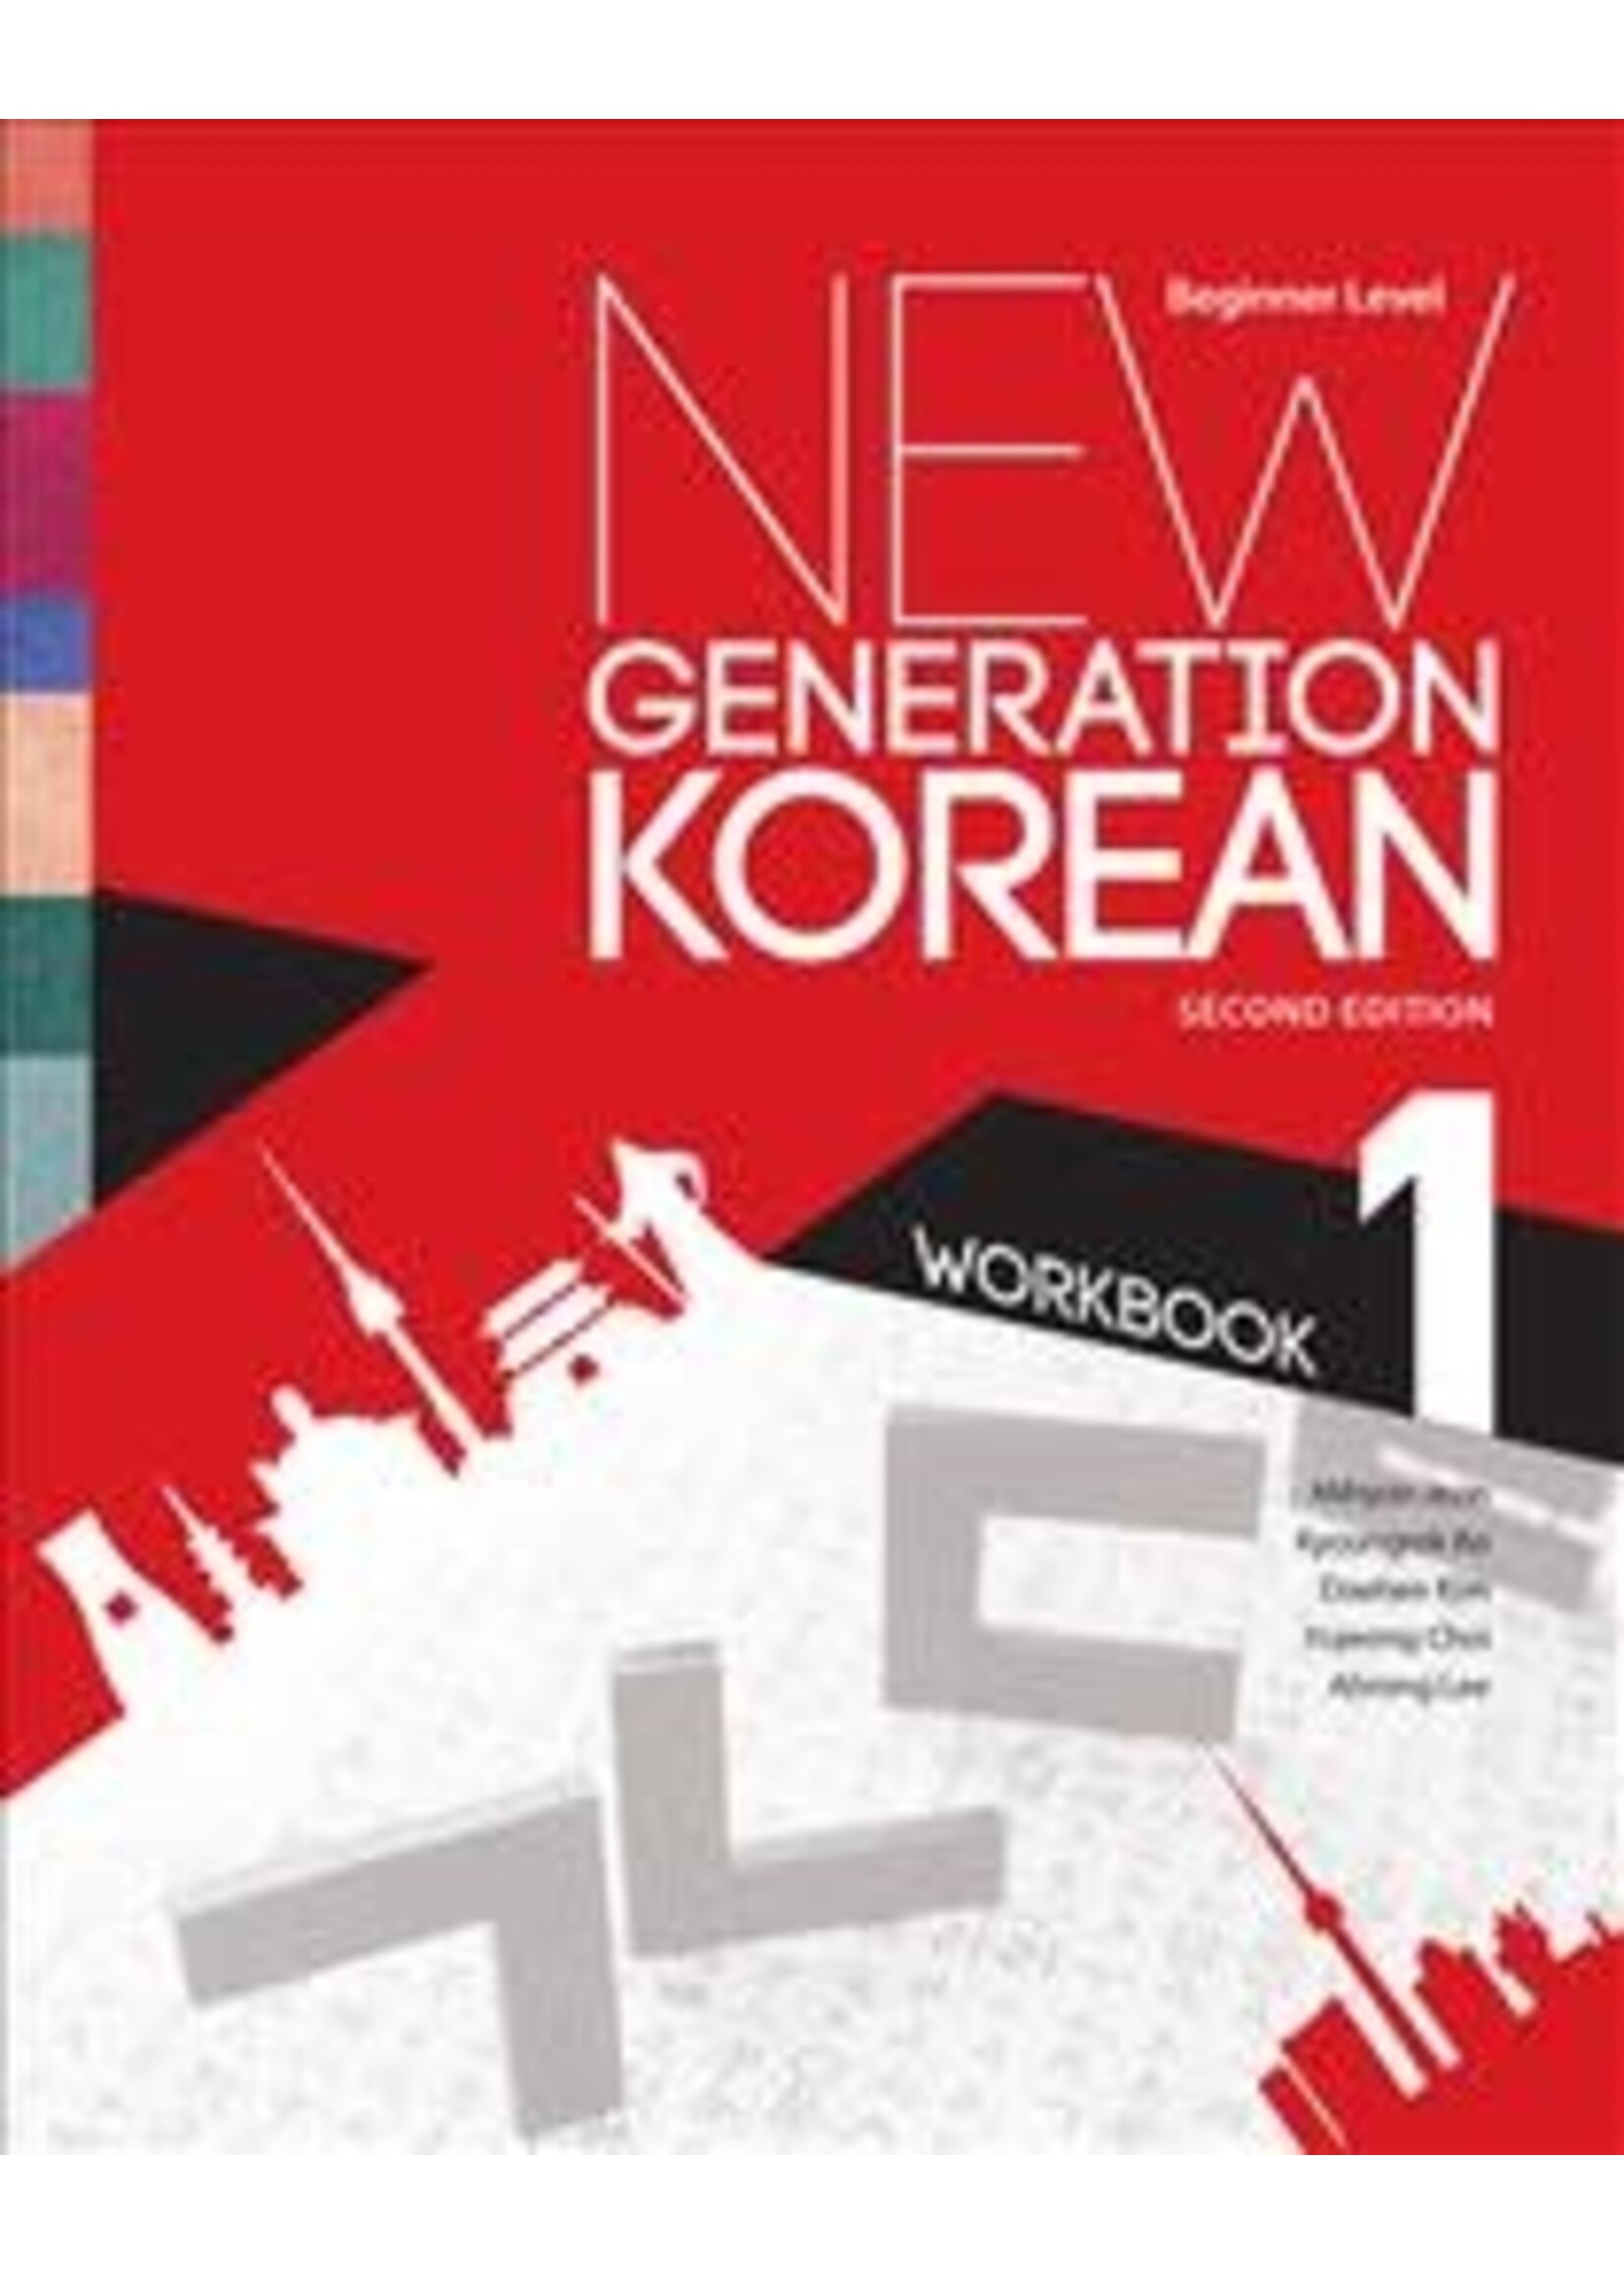 New Generation Korean Workbook: Beginner Level, Second Edition 2nd ed. by Mihyon Jeon, Kyoungrok Ko, Daehee Kim, Yujeong Choi, Ahrong Lee